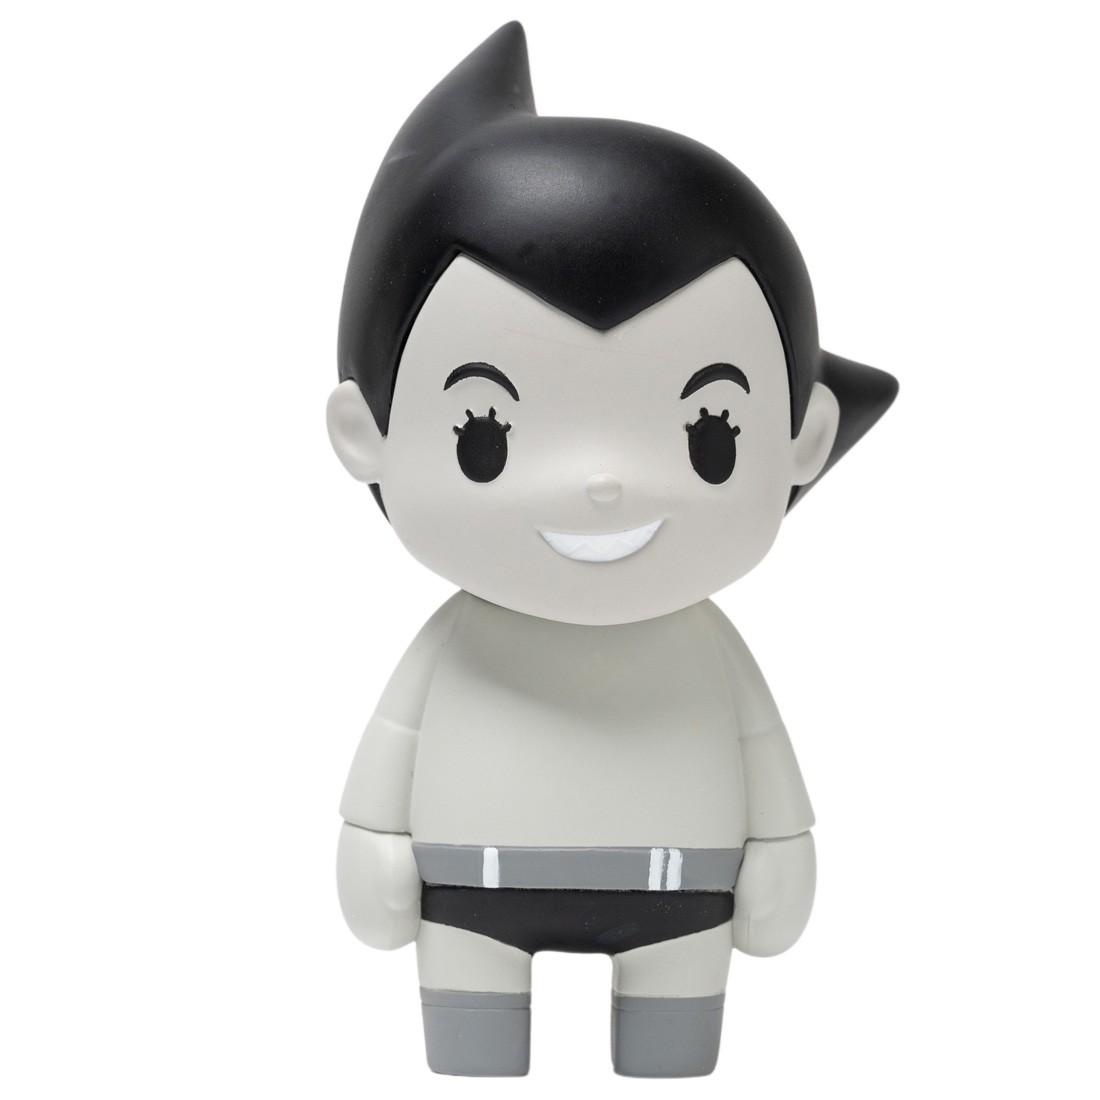 Kokies Astro Boy Monochrome Figure (gray / monochrome)